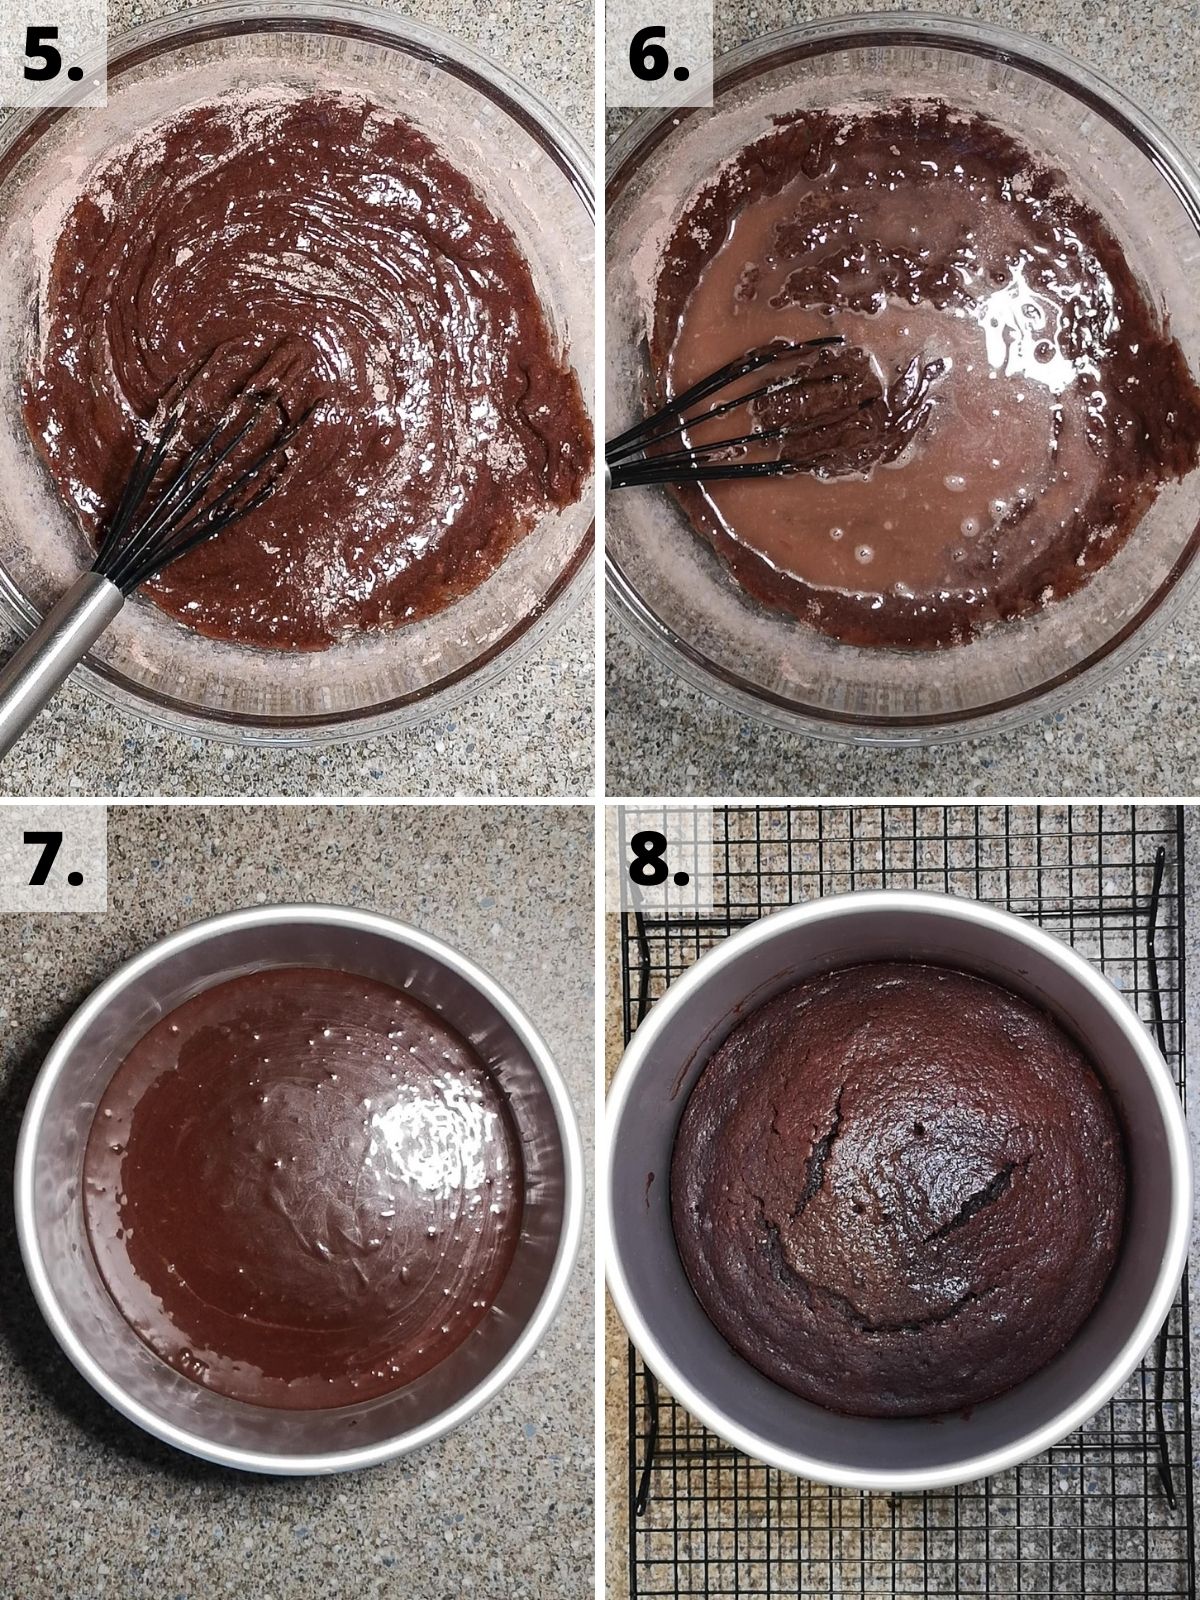 Chocolate cake pops recipe method steps 5 to 8